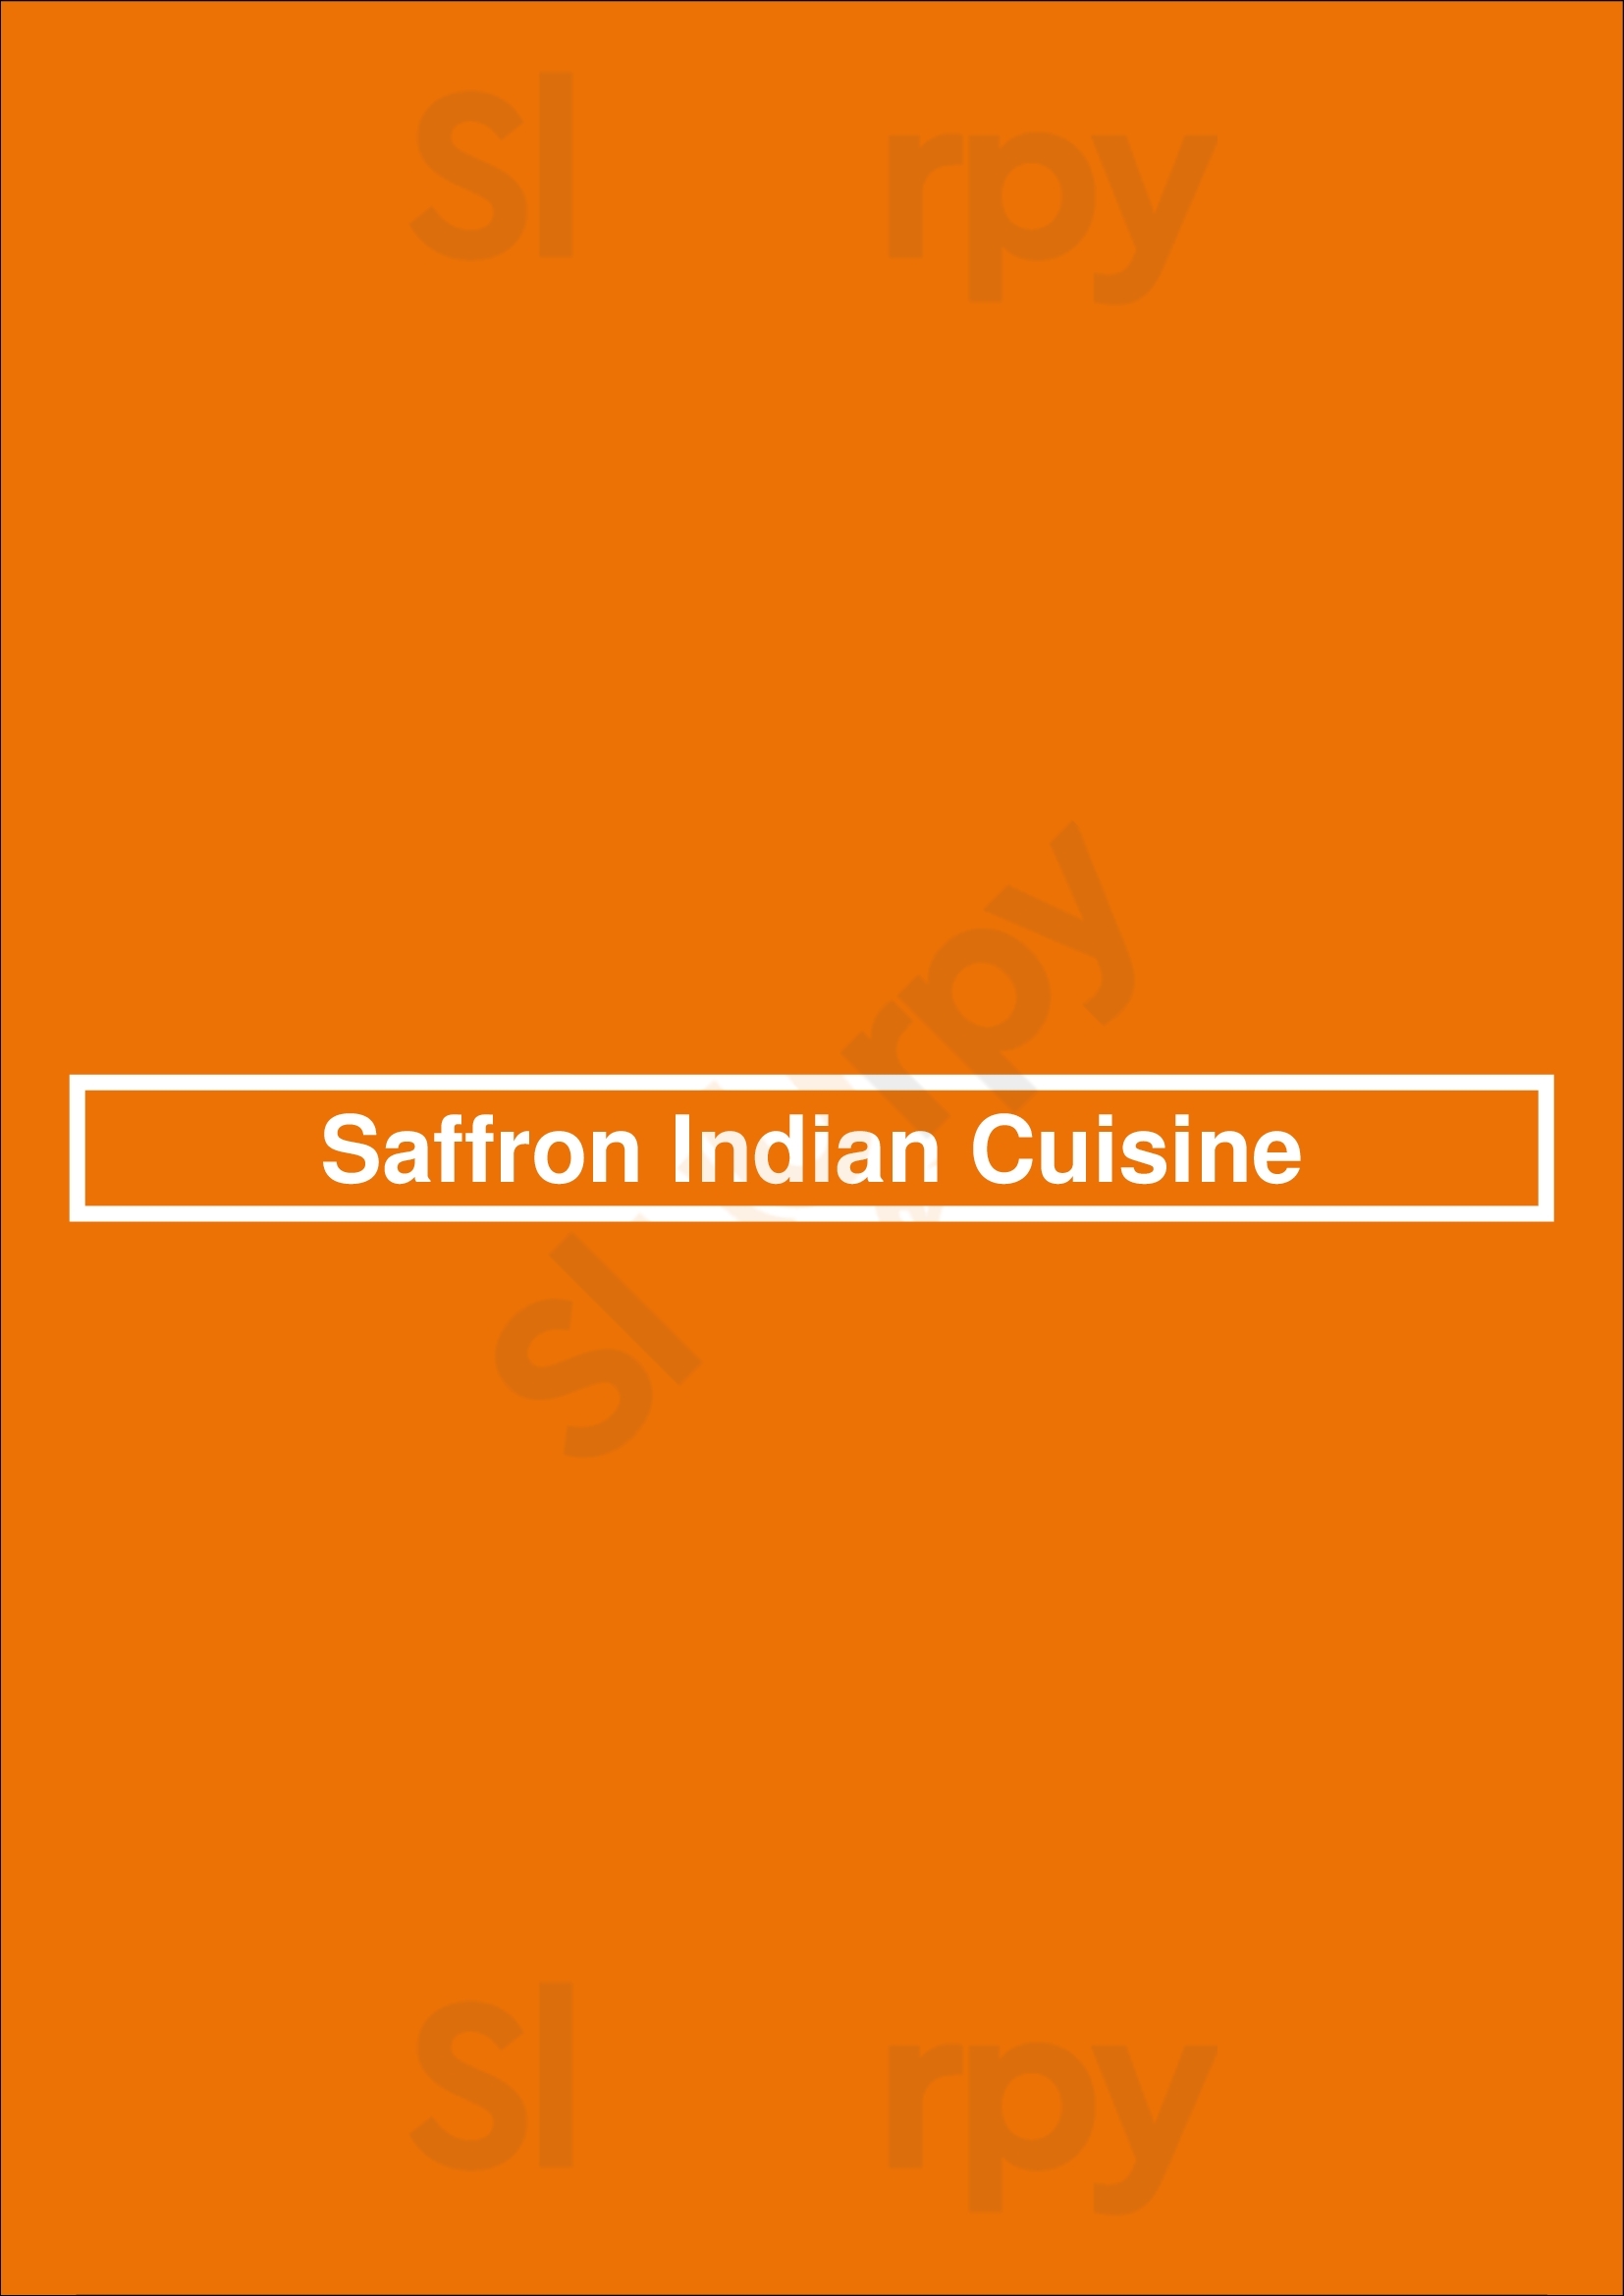 Saffron Indian Cuisine Orlando Menu - 1